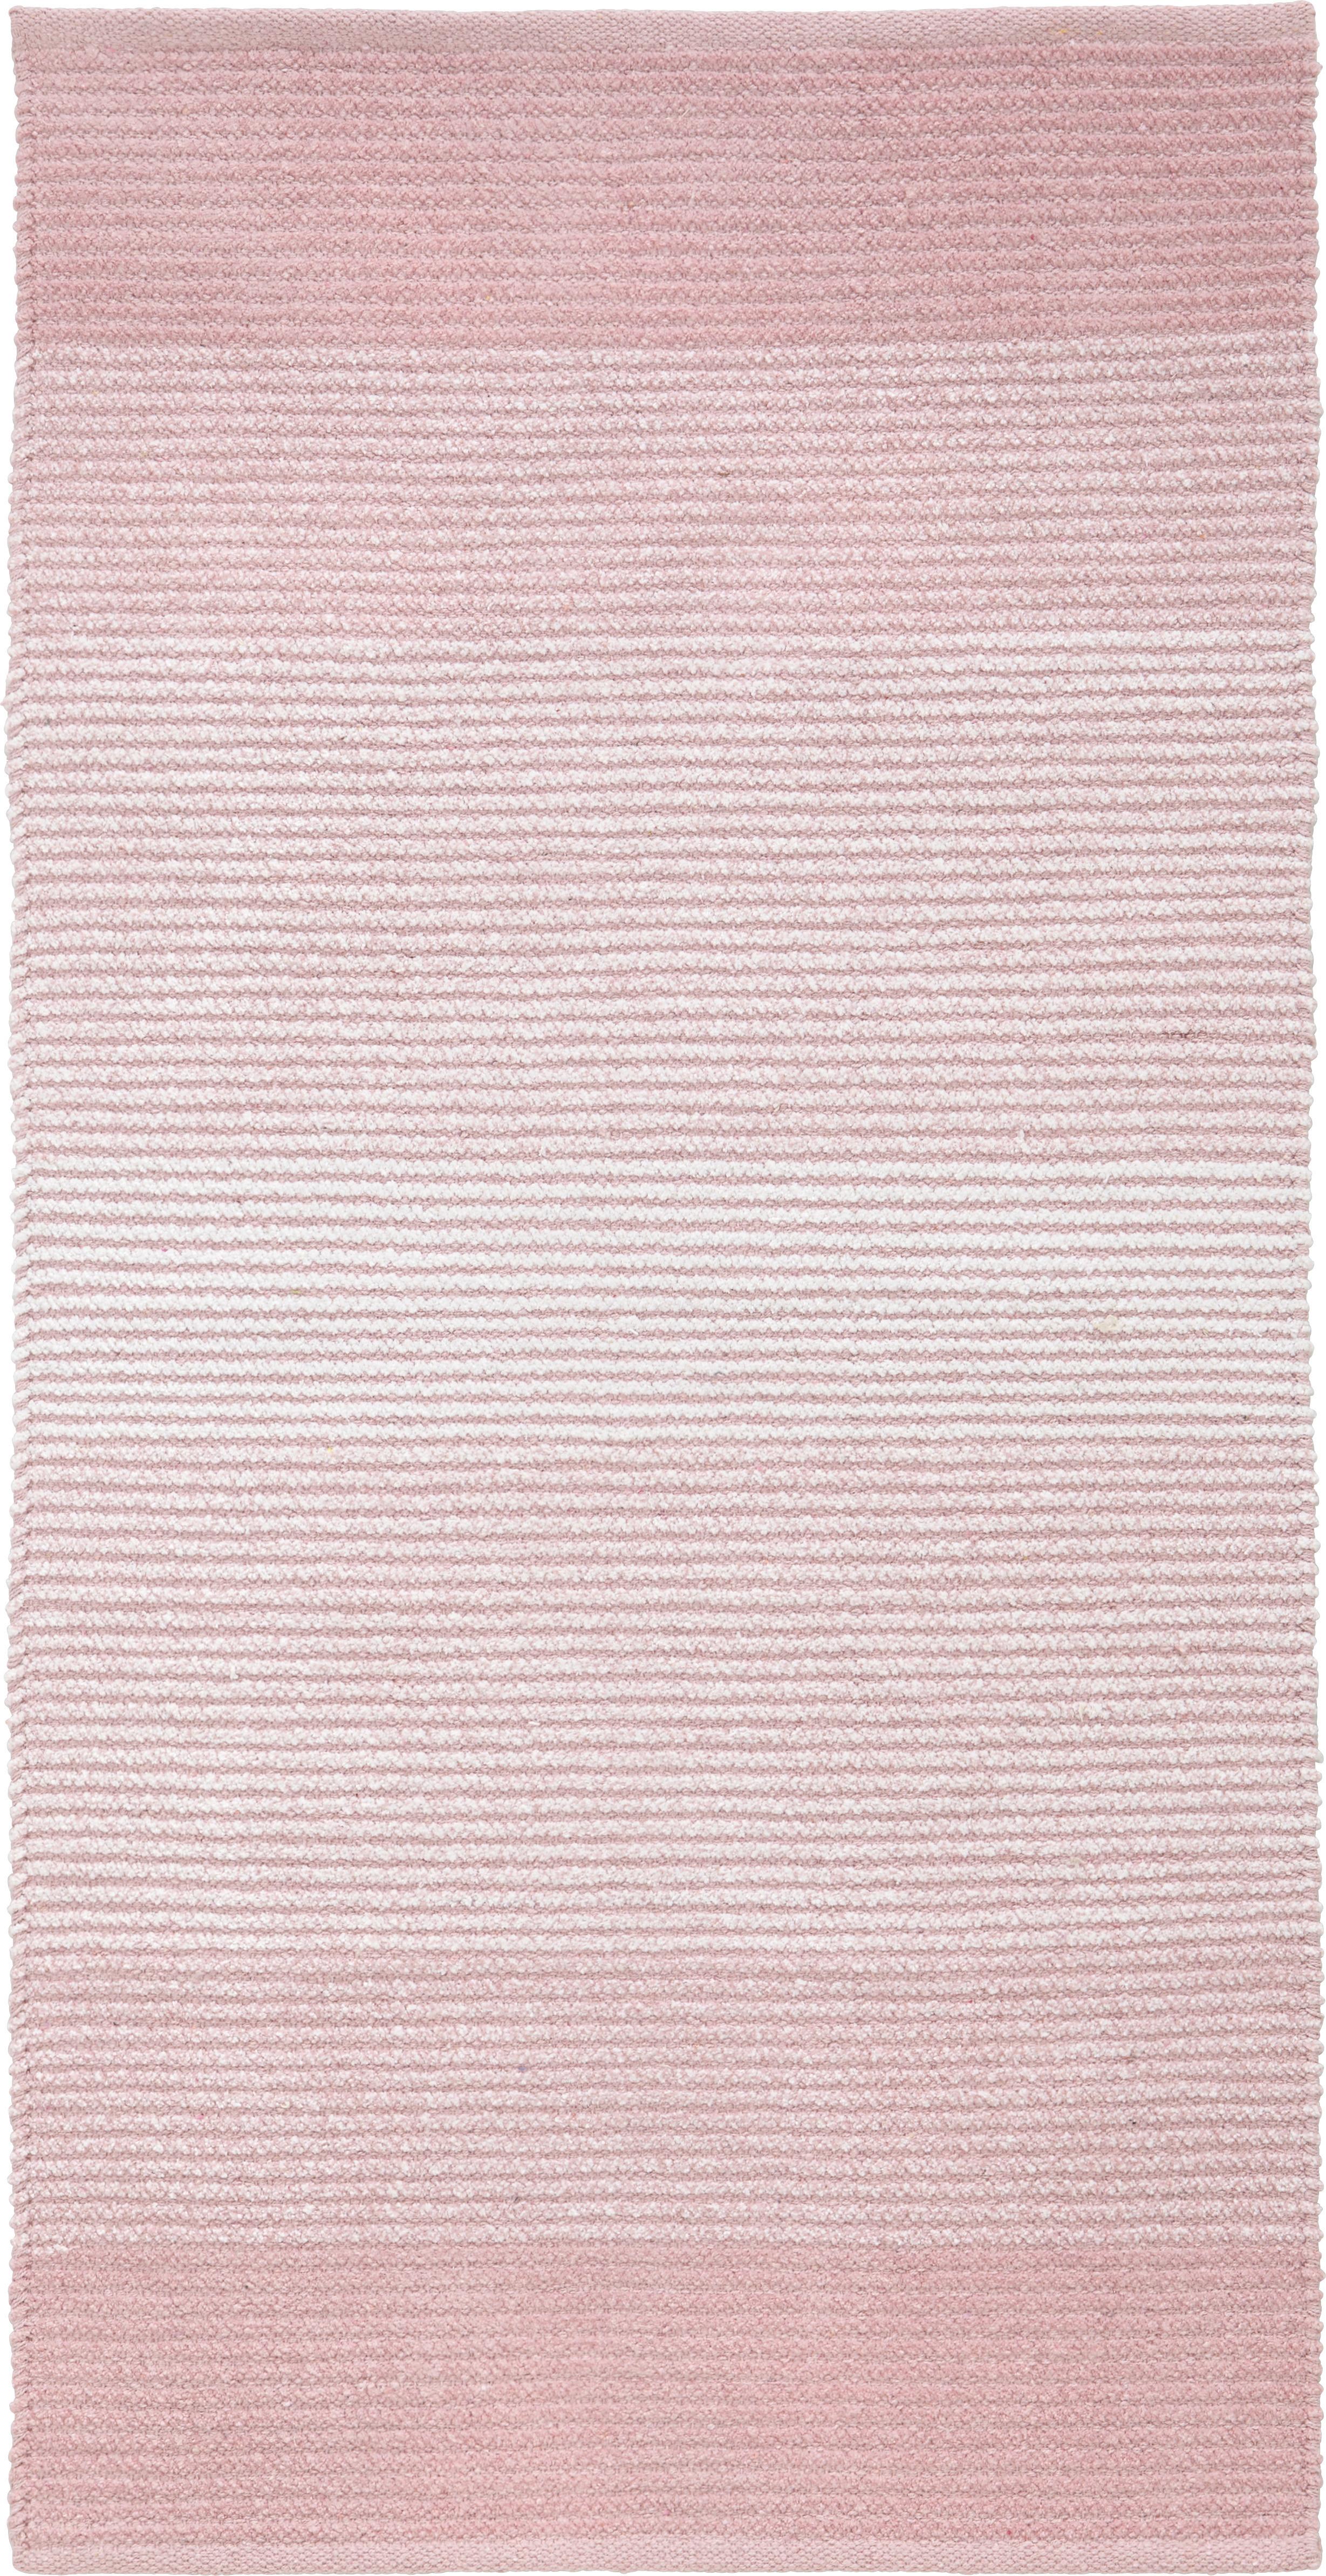 Fleckerlteppich Malto in Rosa ca. 70x140cm - Rosa, MODERN, Textil (70/140cm) - Modern Living